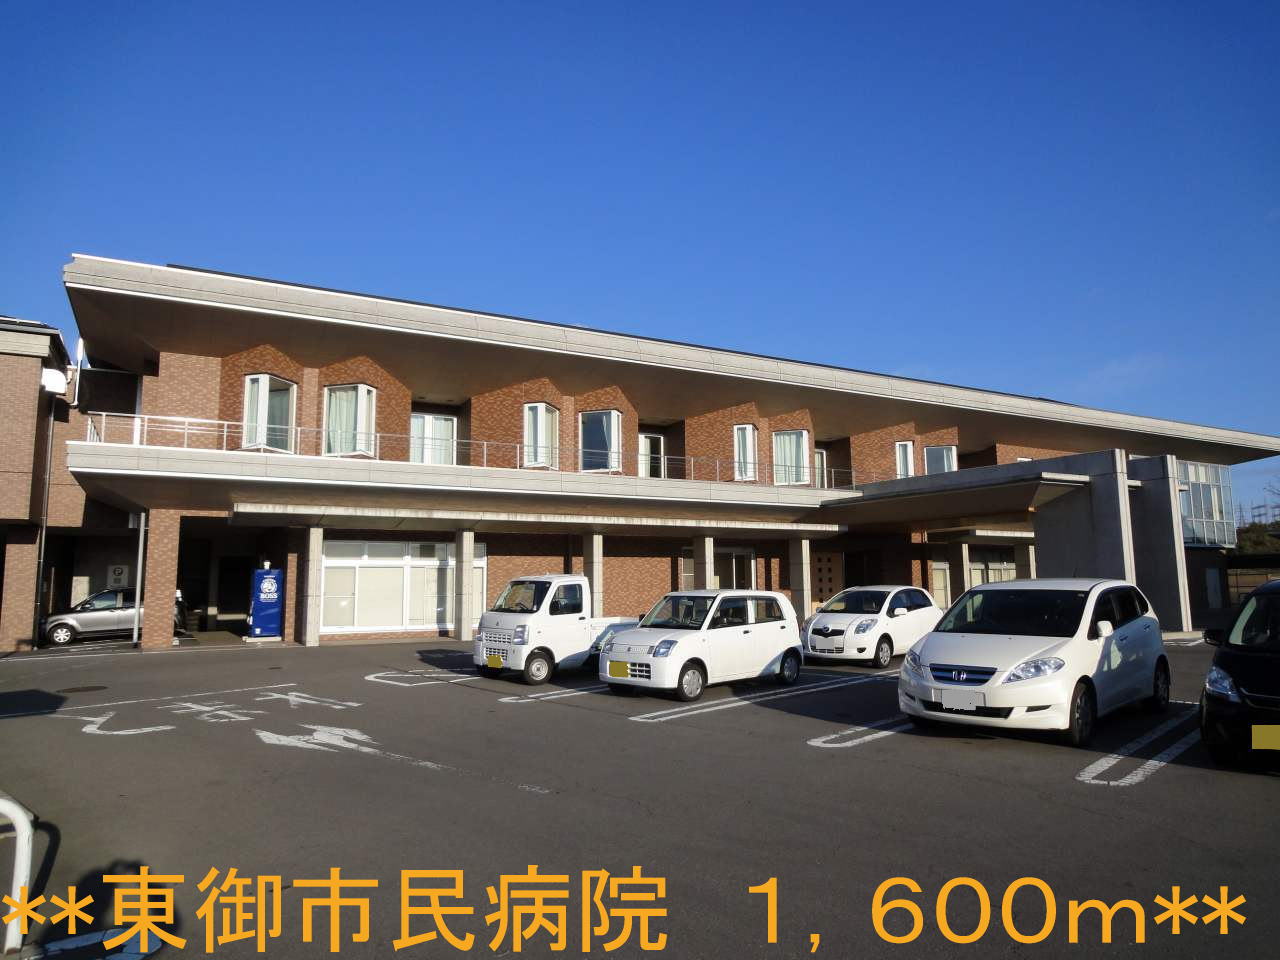 Hospital. Tomi City Hospital (hospital) to 1600m